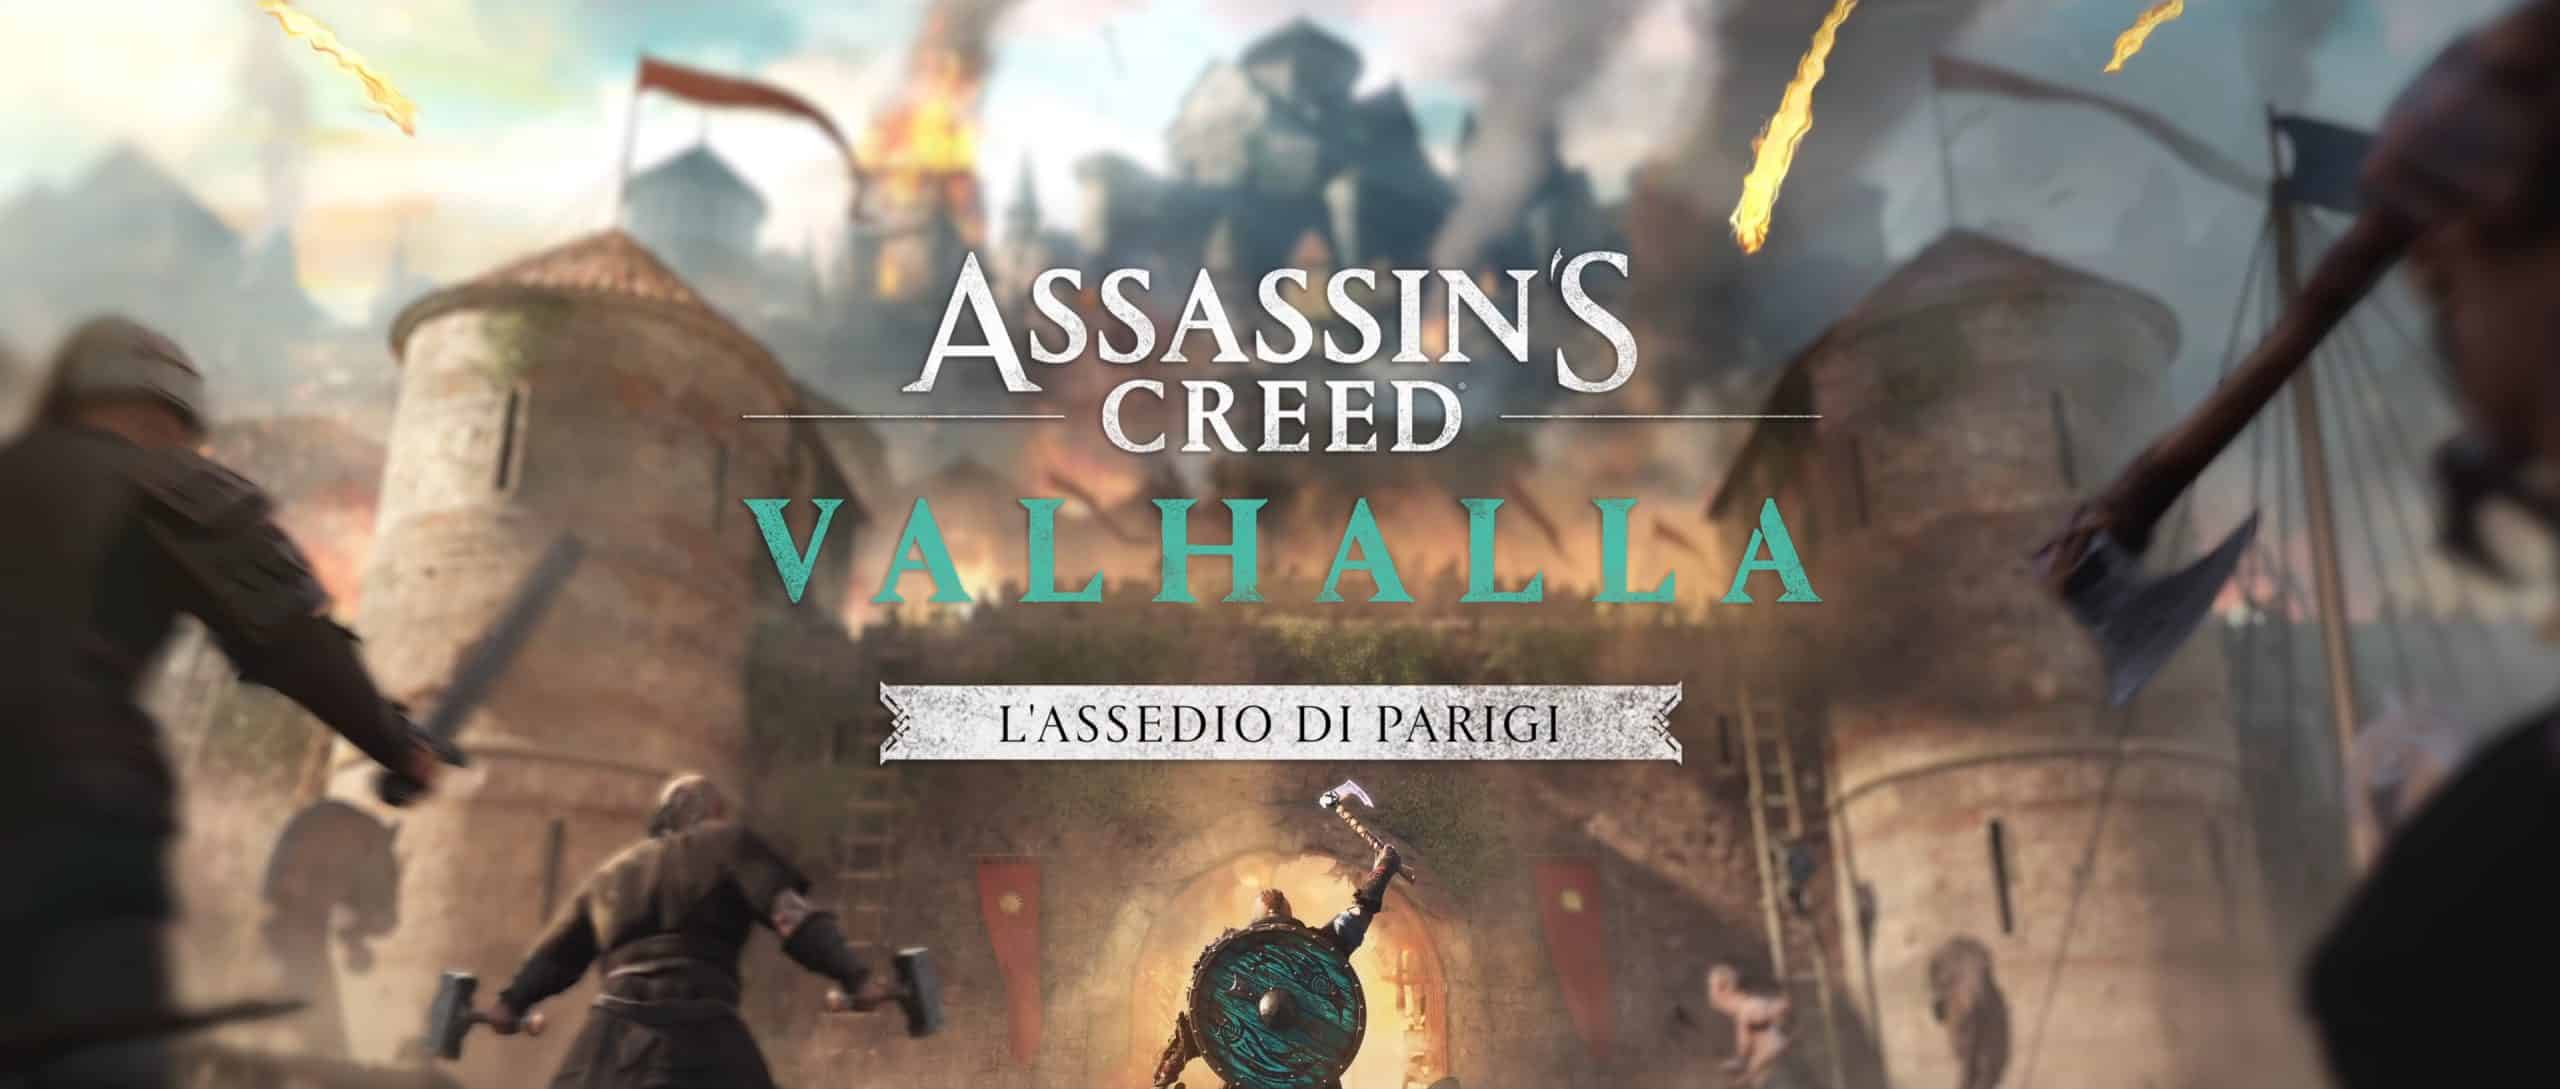 Assassin’s Creed Valhalla:L’assedio di Parigi, data di uscita rivelata?